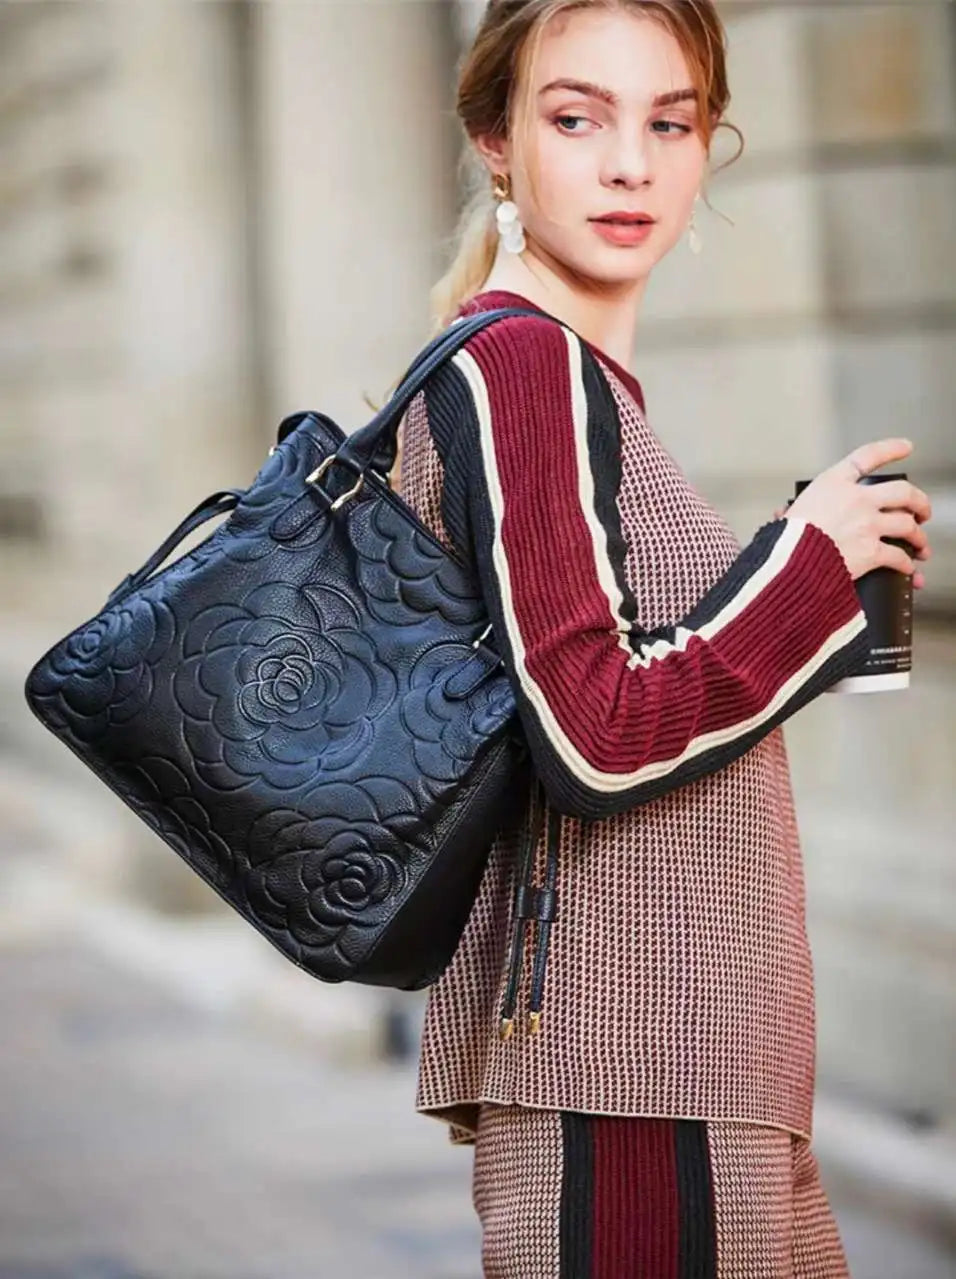 Zency Lady Tote Bag Genuine Leather Embossed Rose Decorate Sling